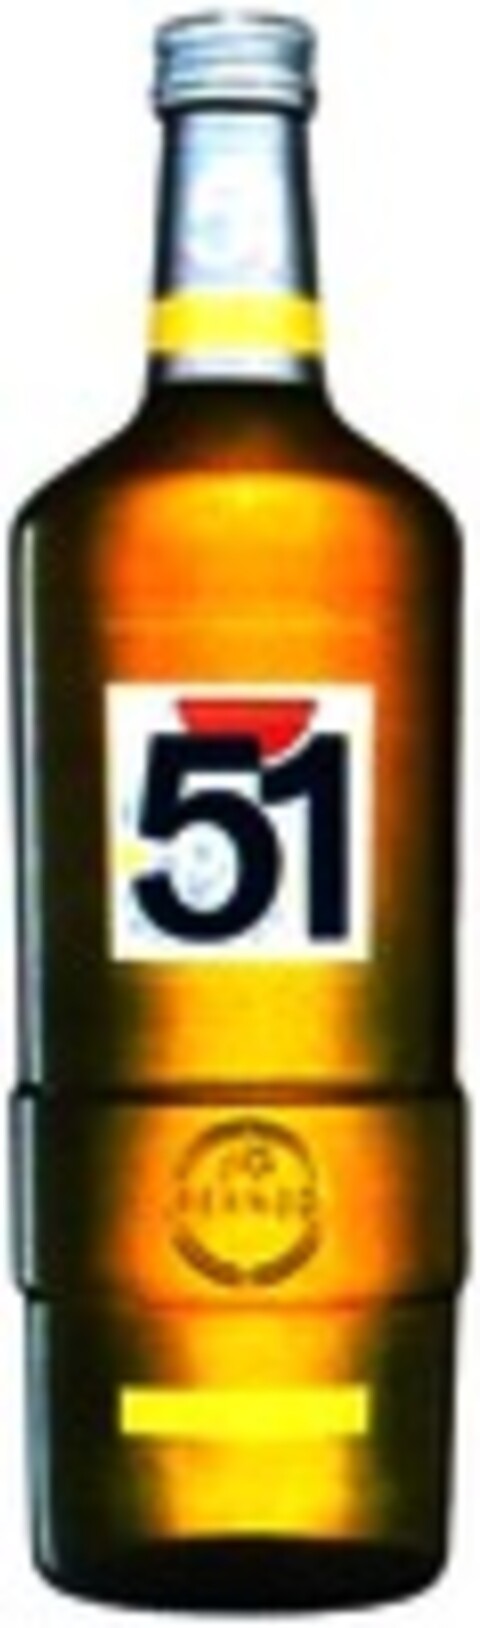 51 PERNOD Logo (WIPO, 21.09.2009)